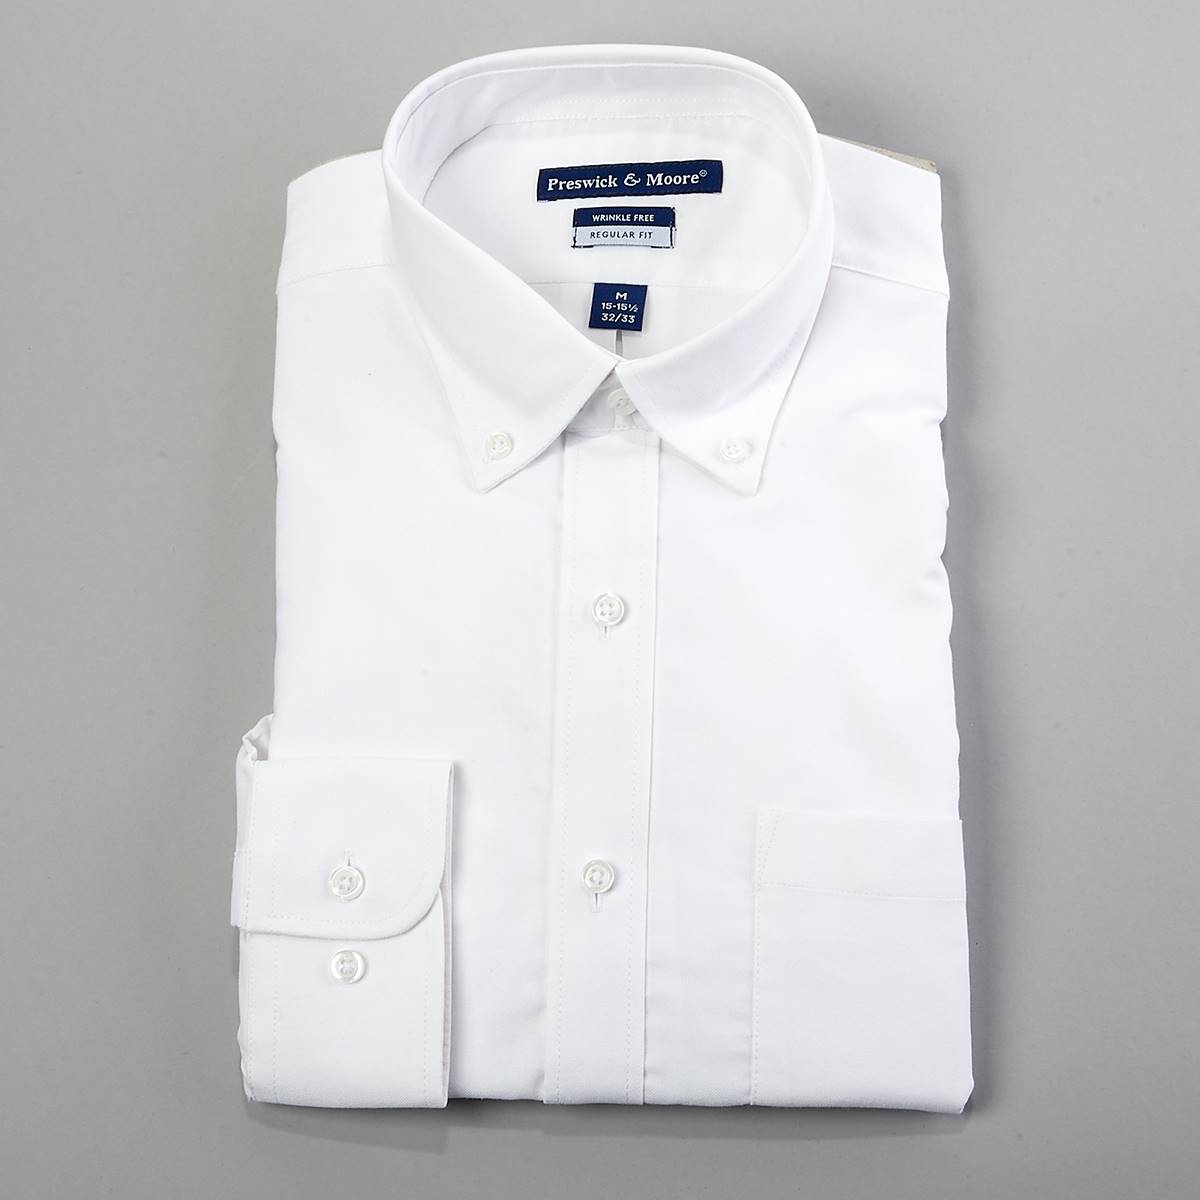 Mens Preswick & Moore Oxford Dress Shirt - White